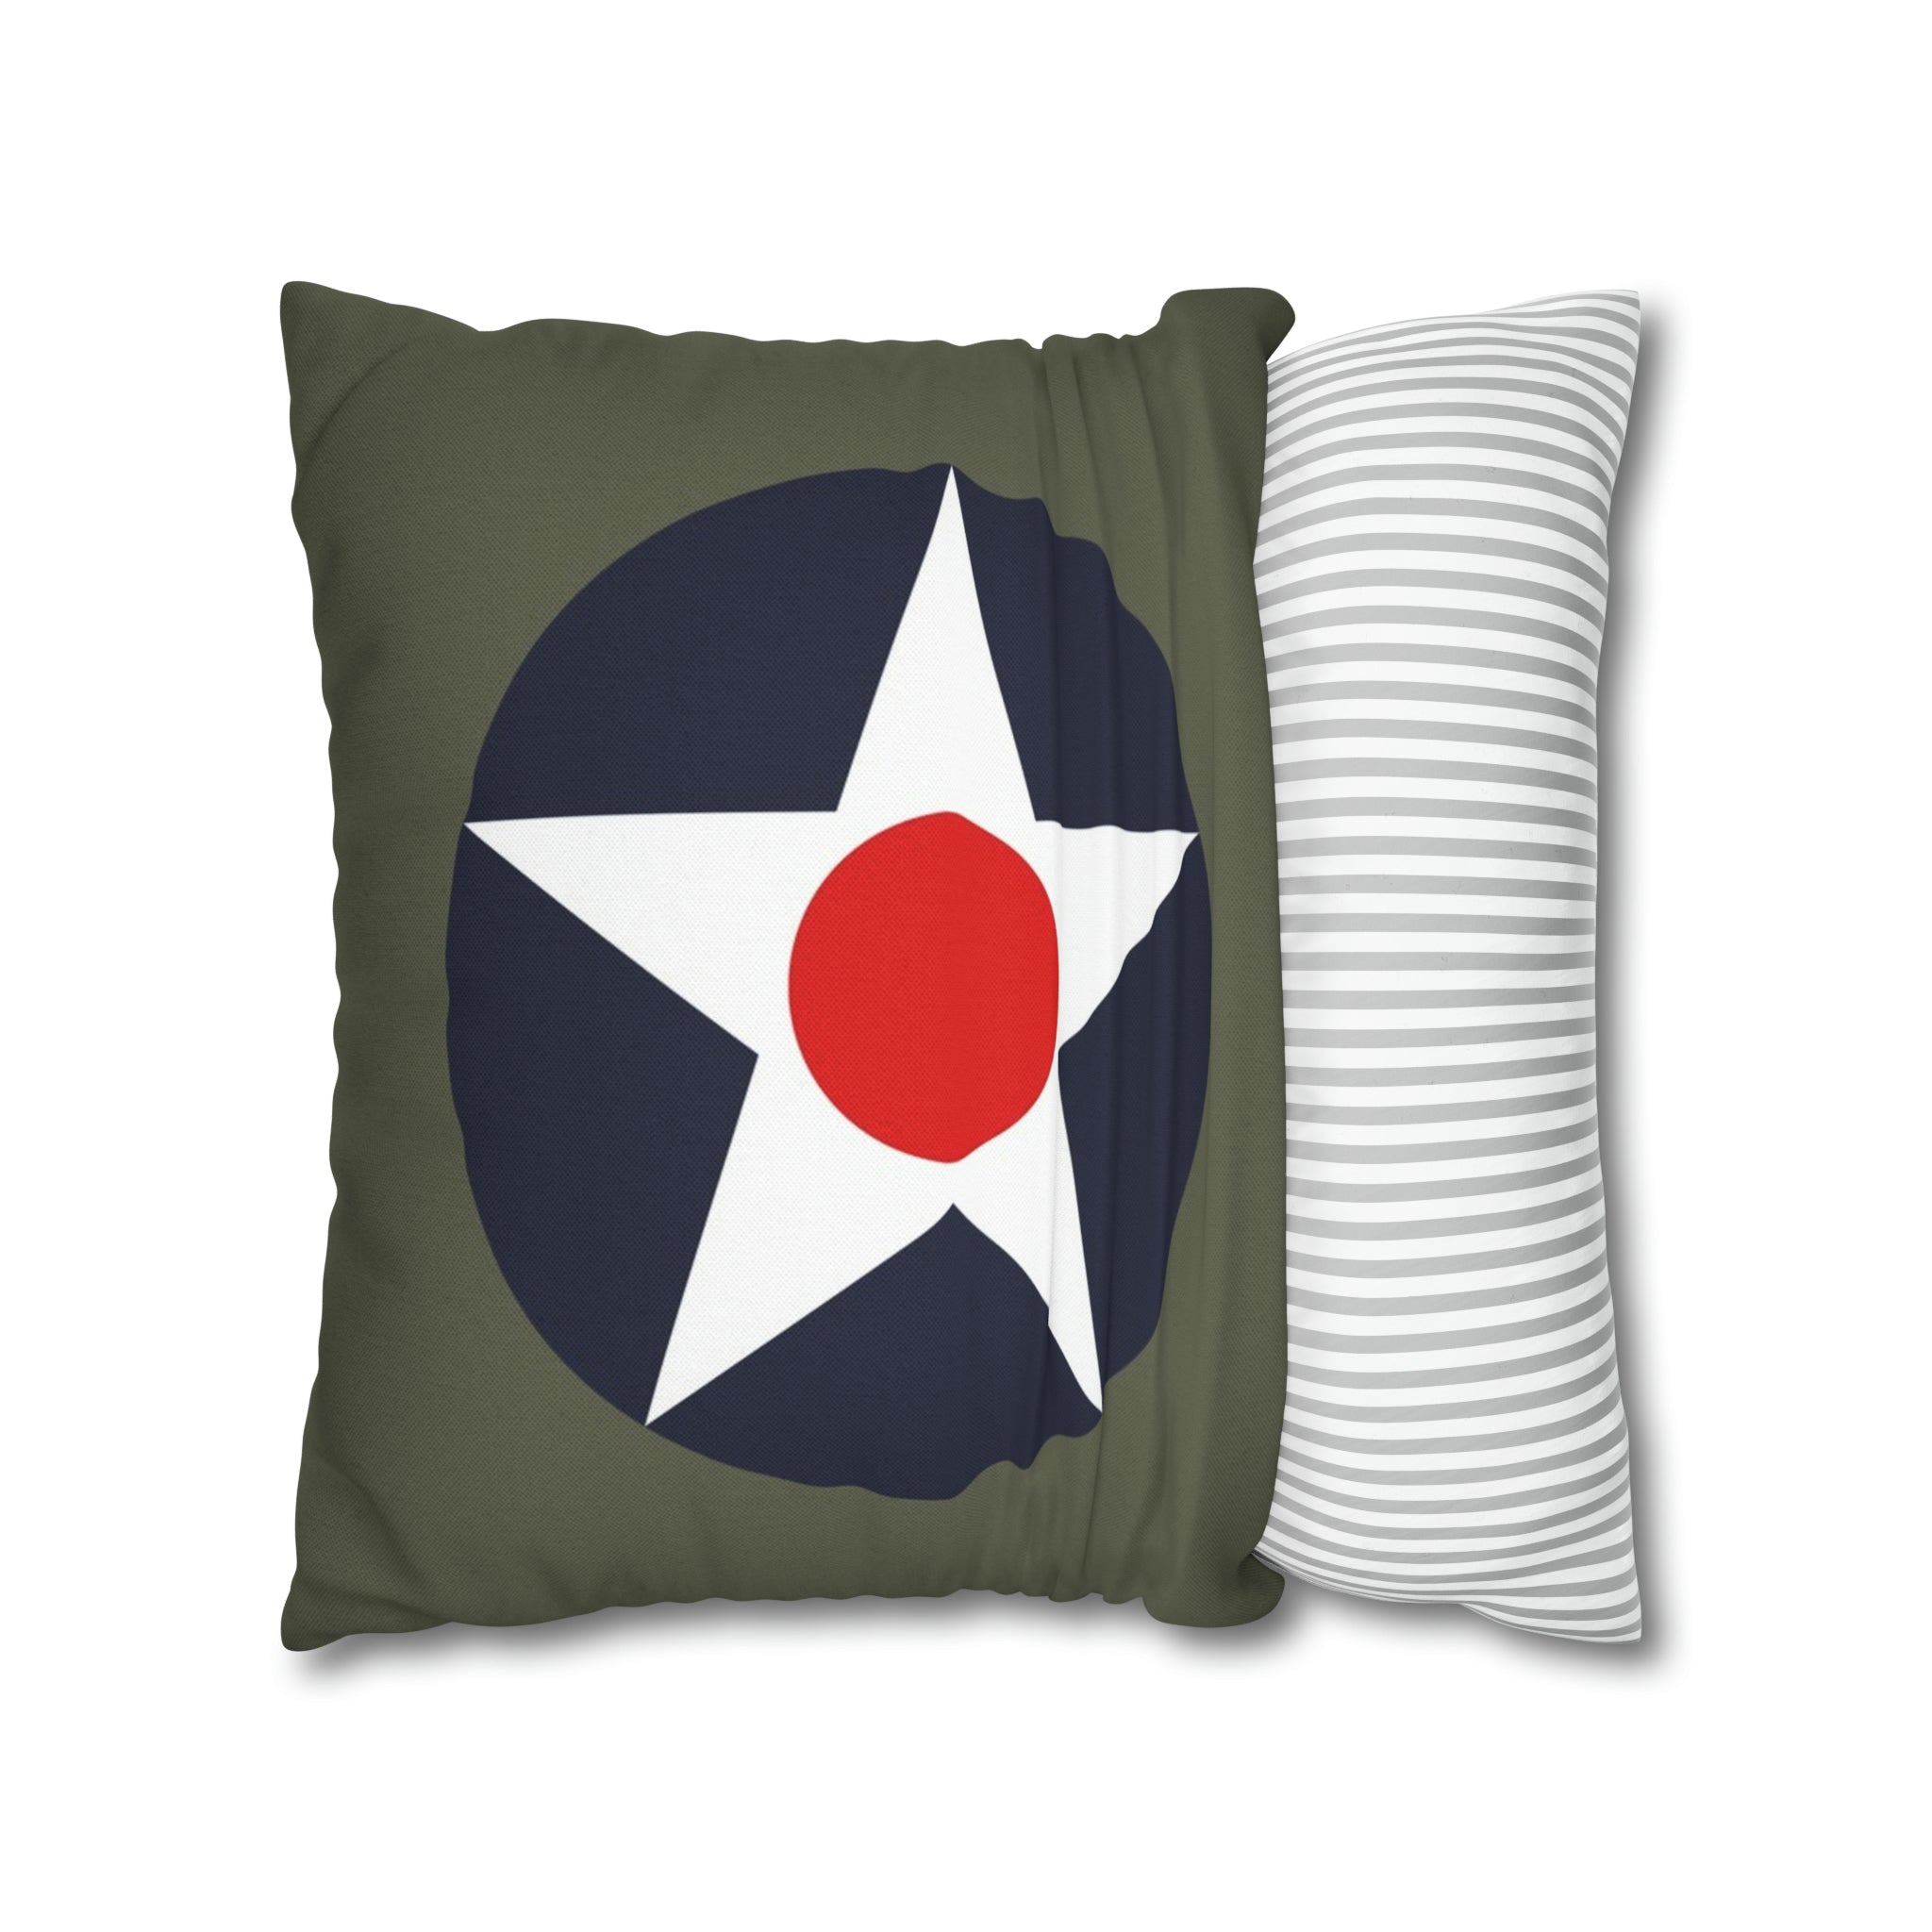 WWII USAAF "Meatball" Roundel Square Pillowcase - I Love a Hangar